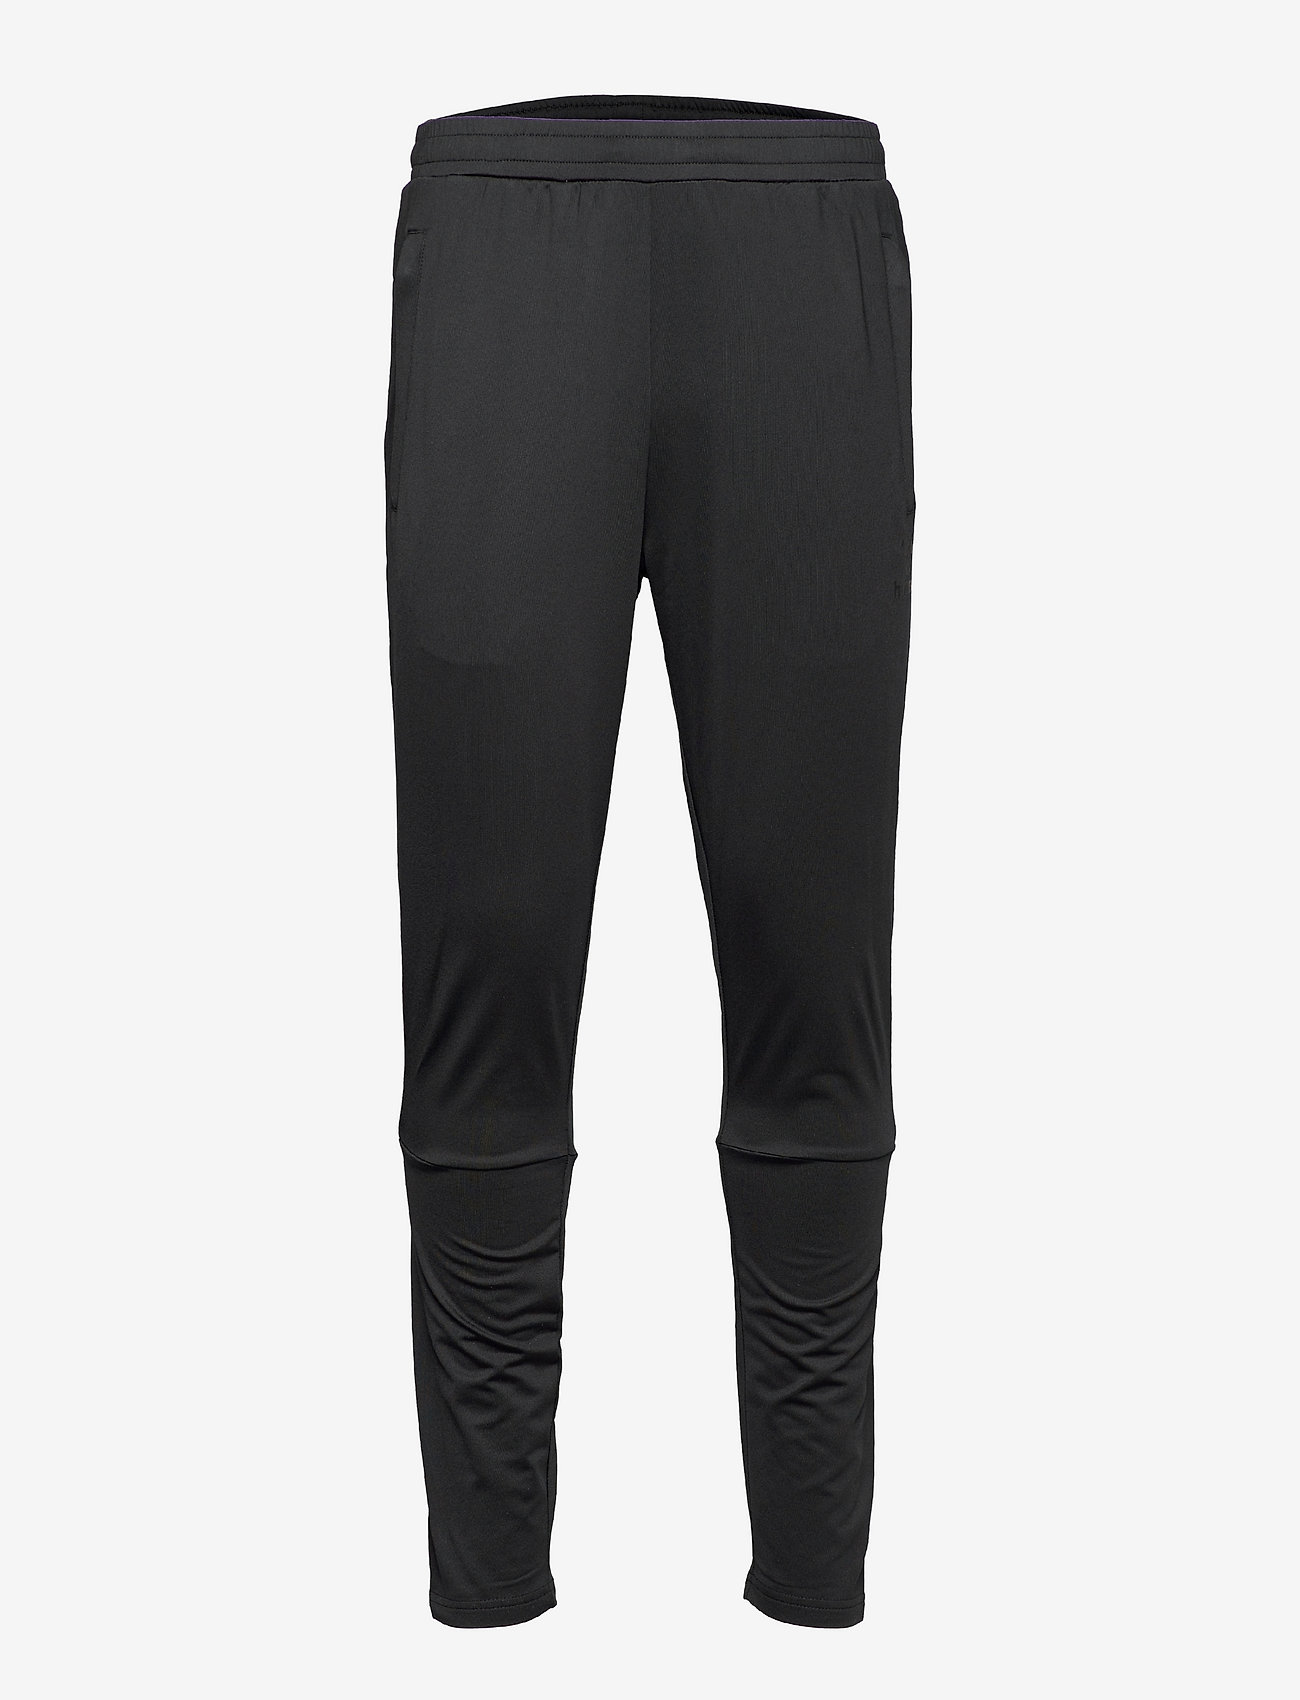 Hummel - hmlASTON TAPERED PANTS - sports pants - black - 0